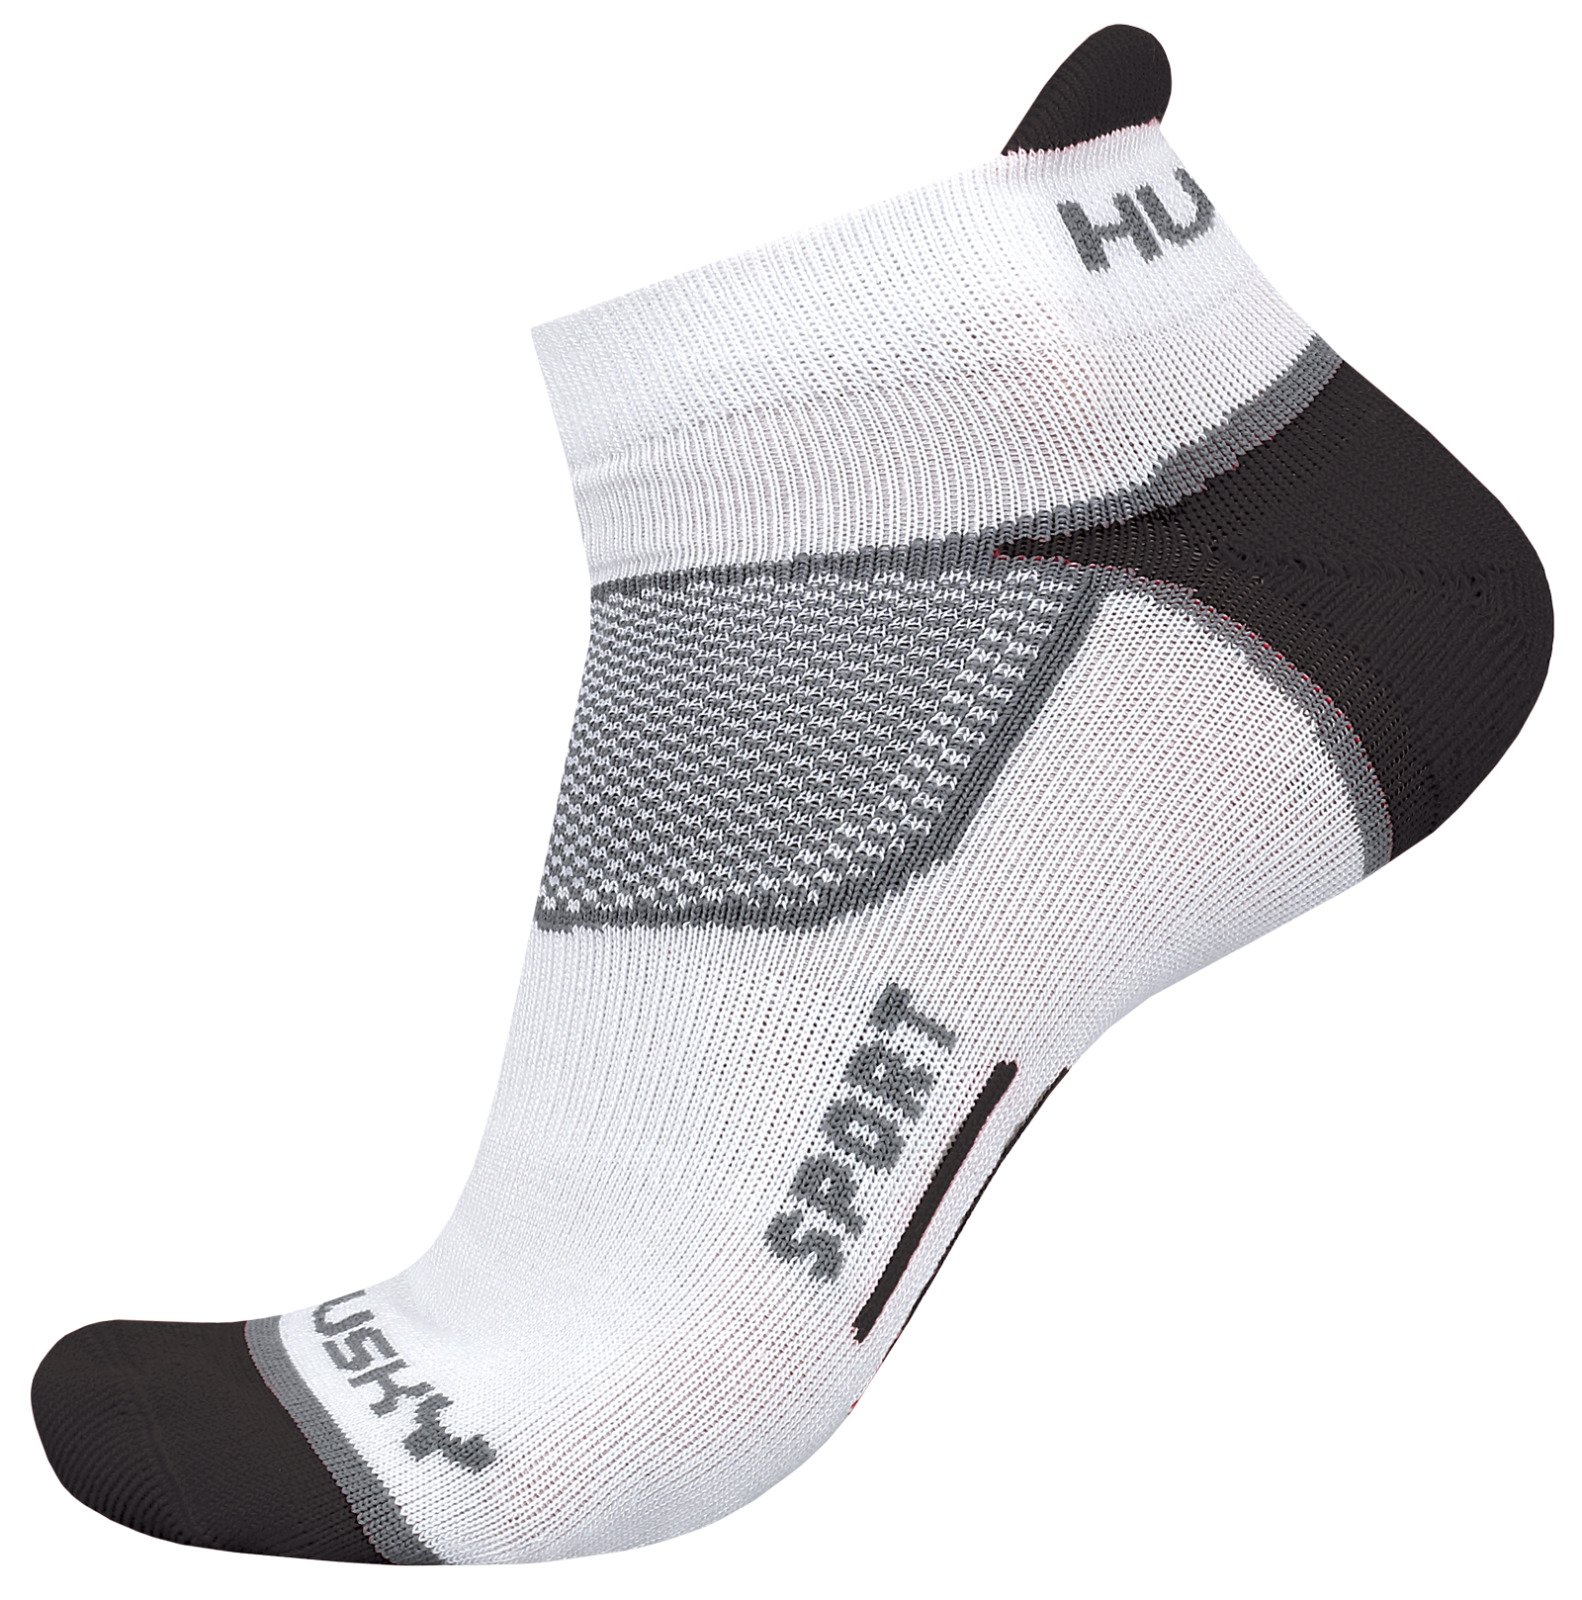 Ponožky HUSKY Sport + Sleva 5% - zadej v košíku kód: SLEVA5 Velikost: M (36-40)